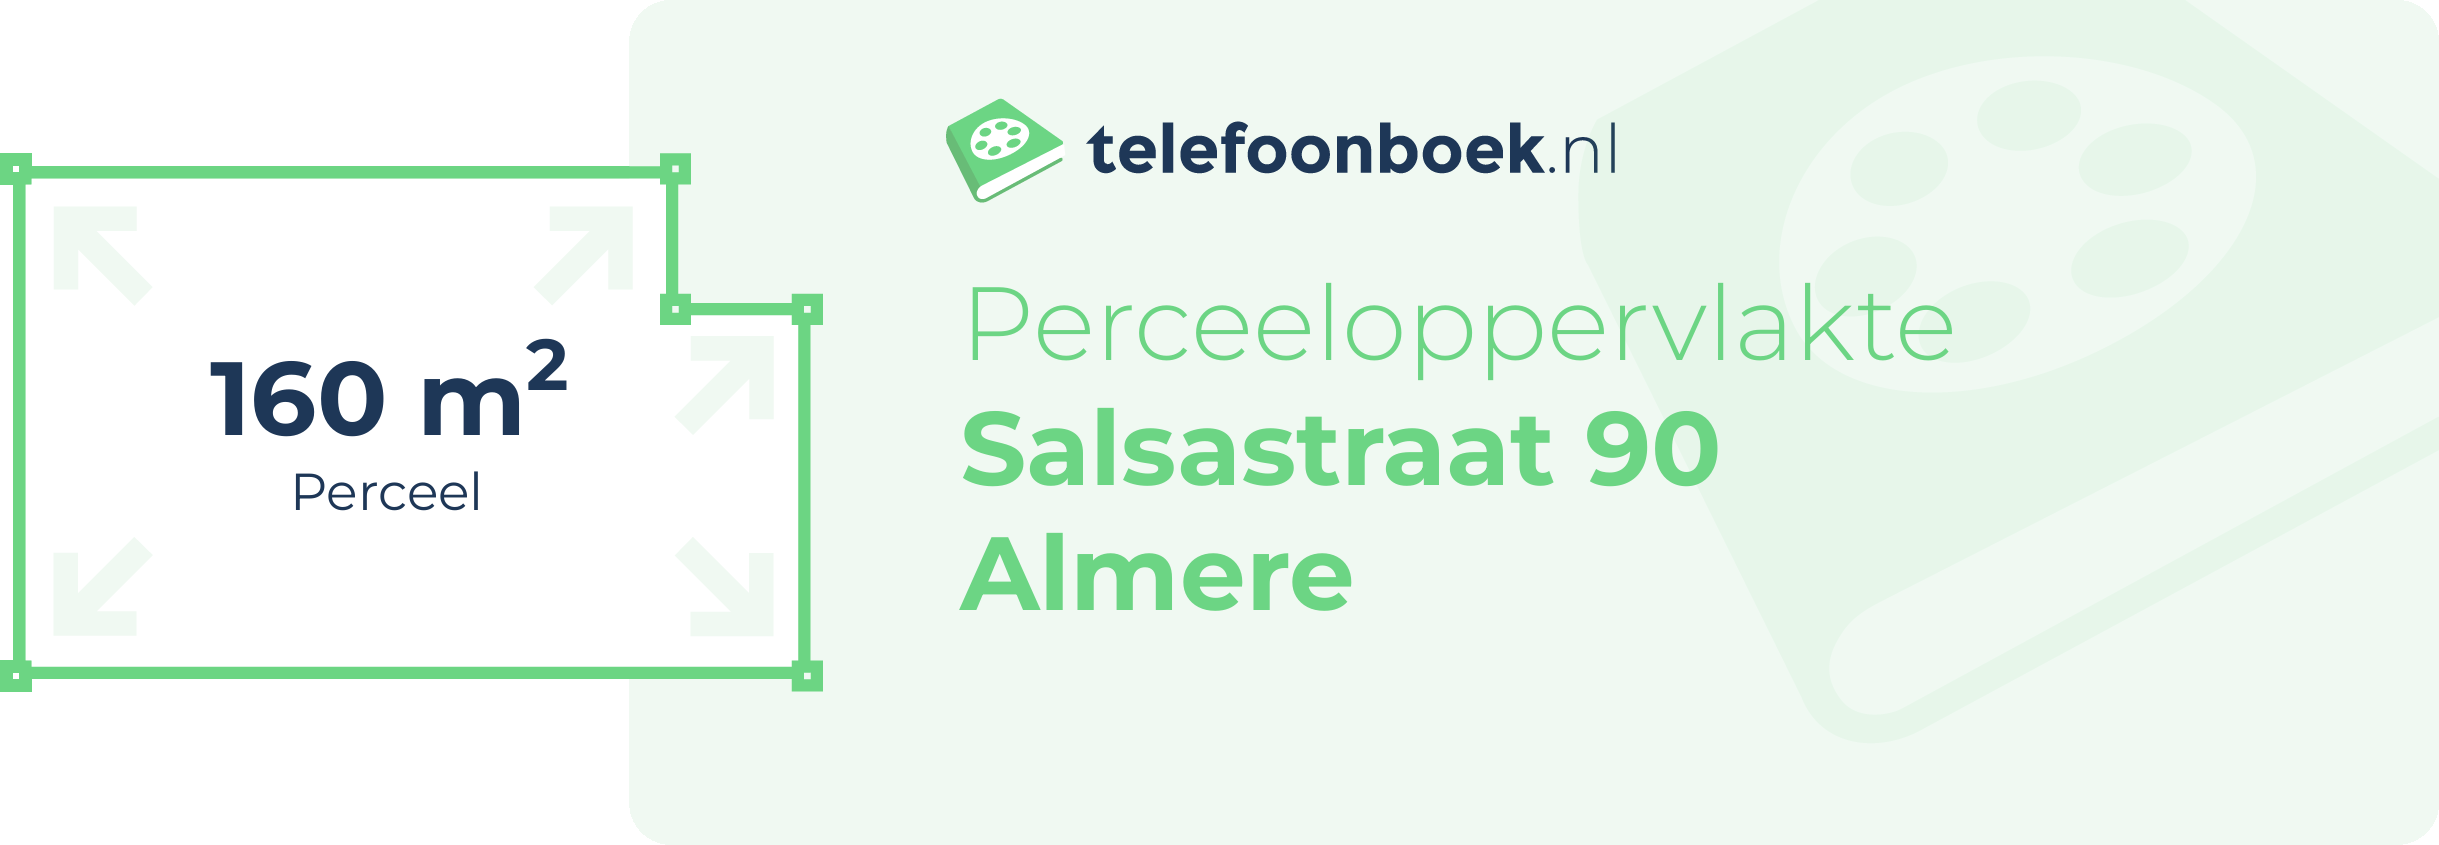 Perceeloppervlakte Salsastraat 90 Almere